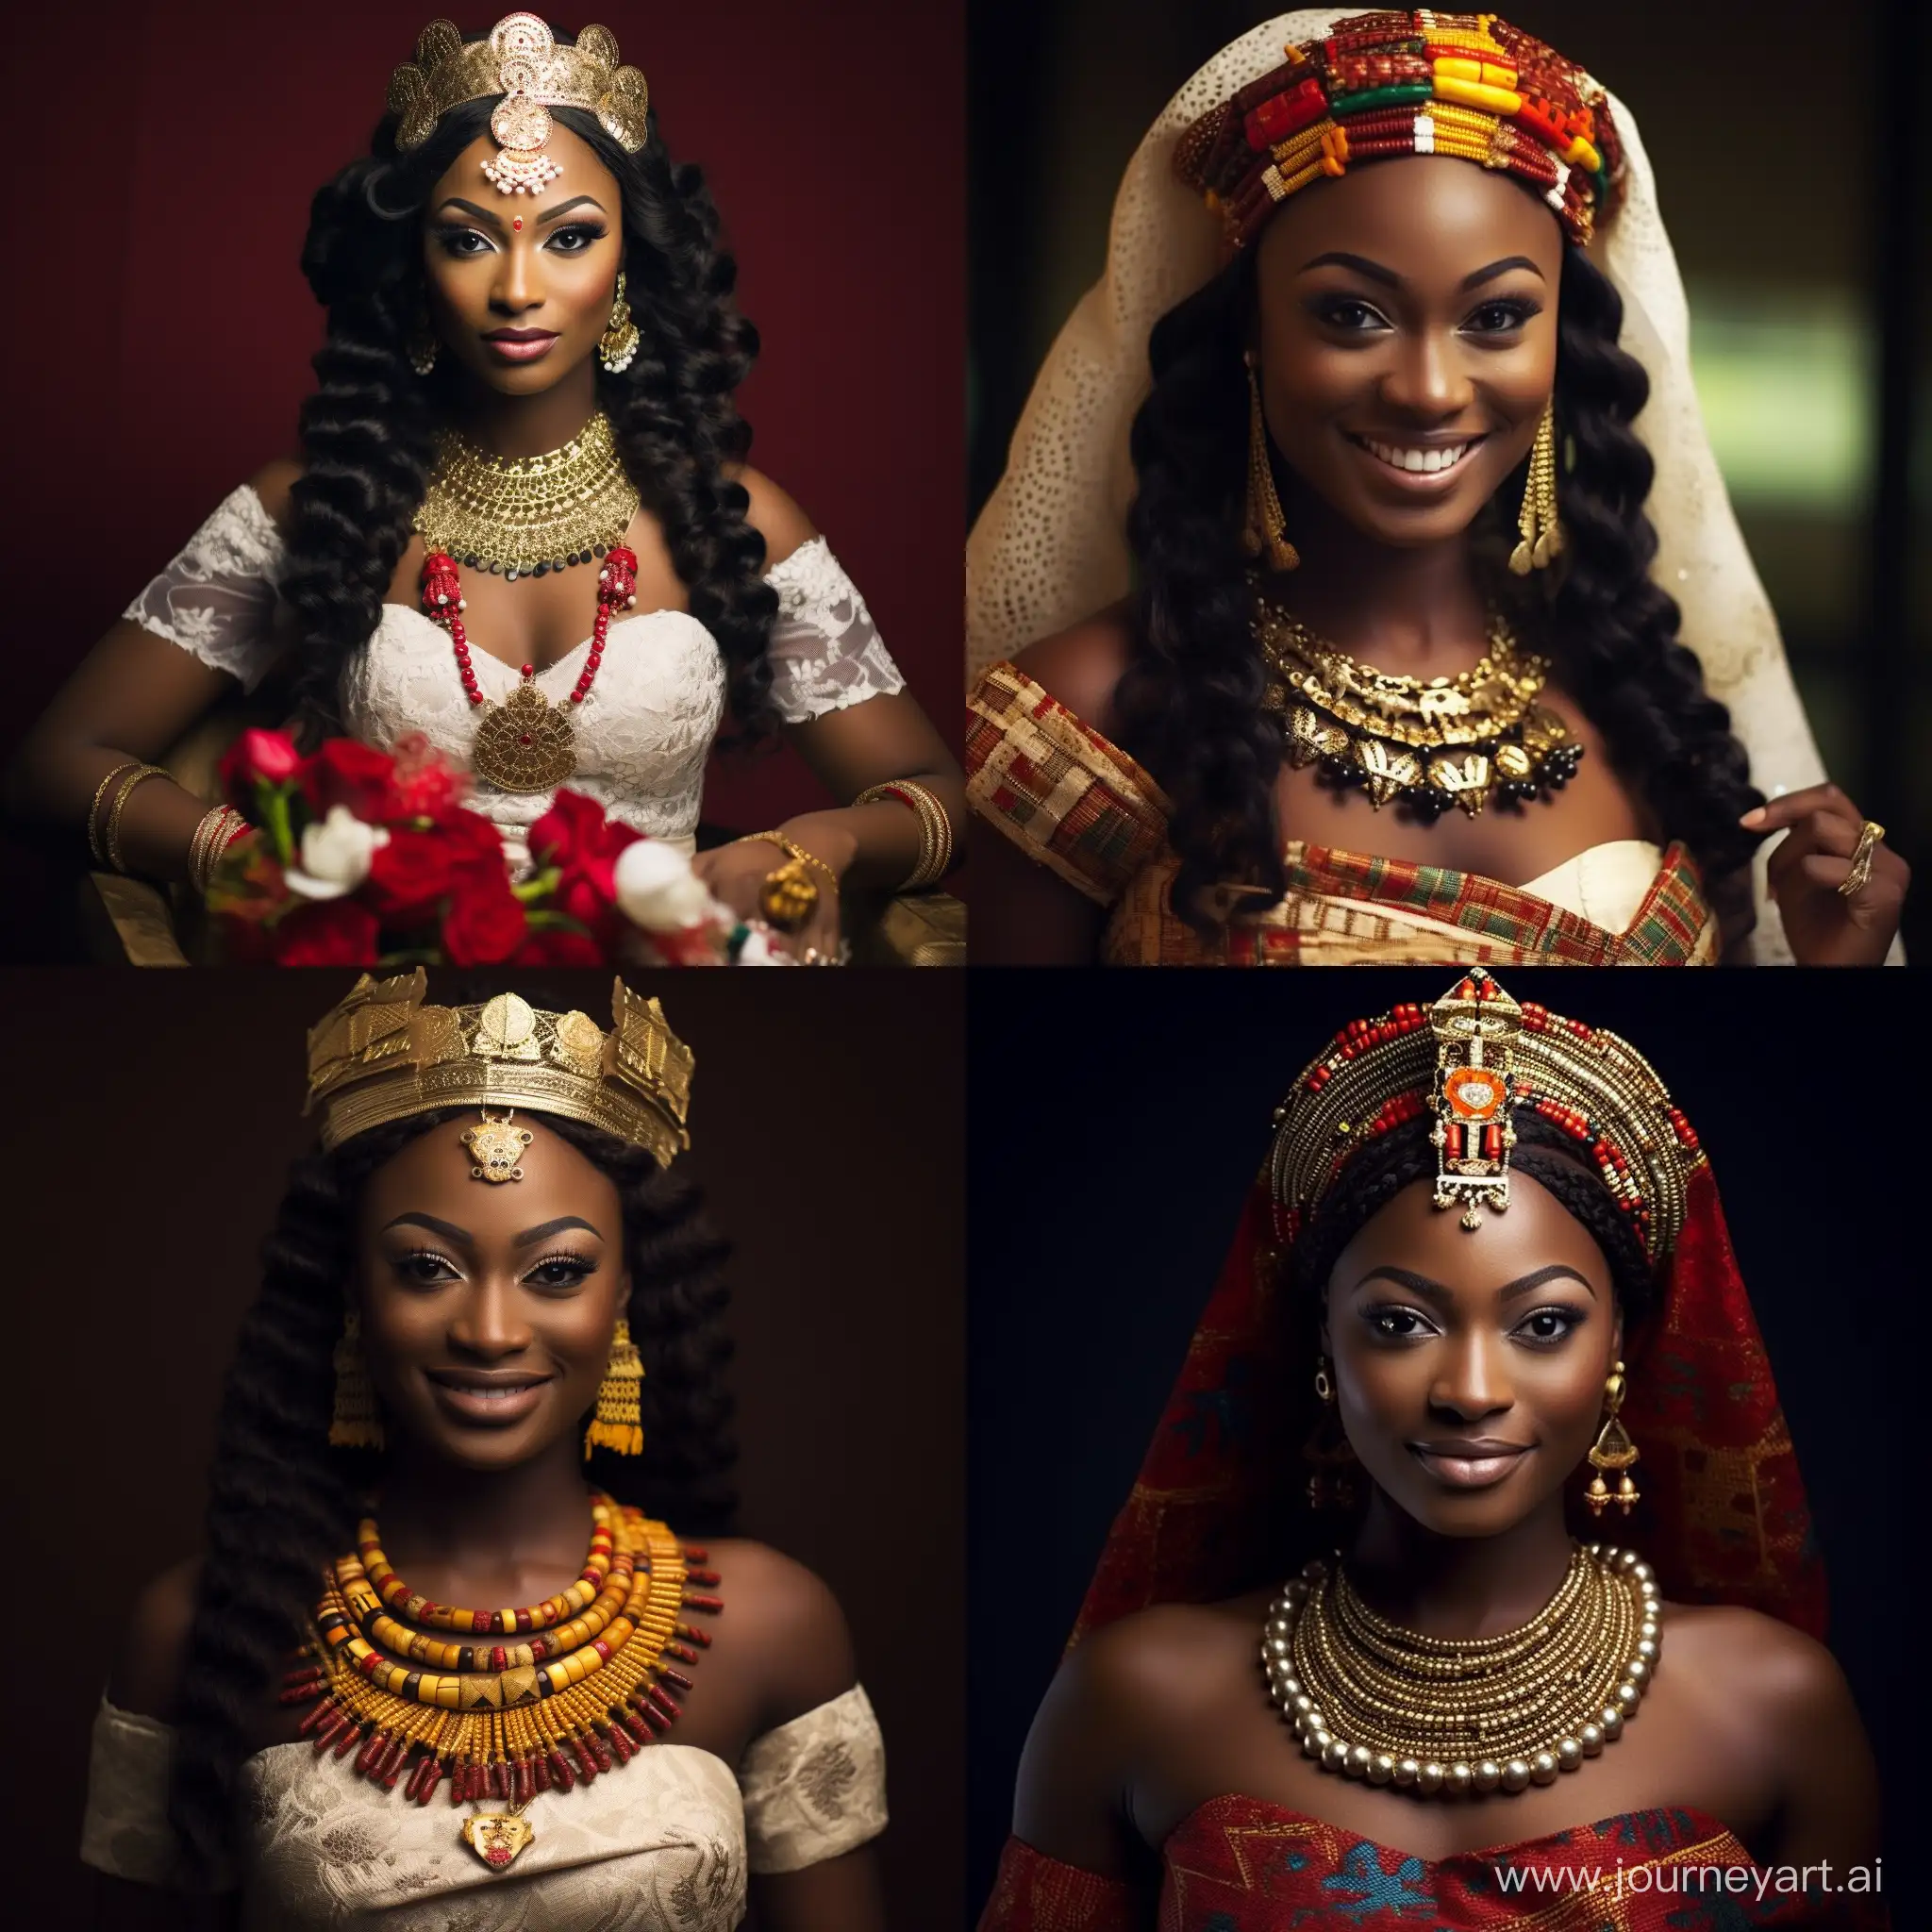 Ghanaian-Bride-Celebrating-Traditions-at-V6-with-Elegant-Attire